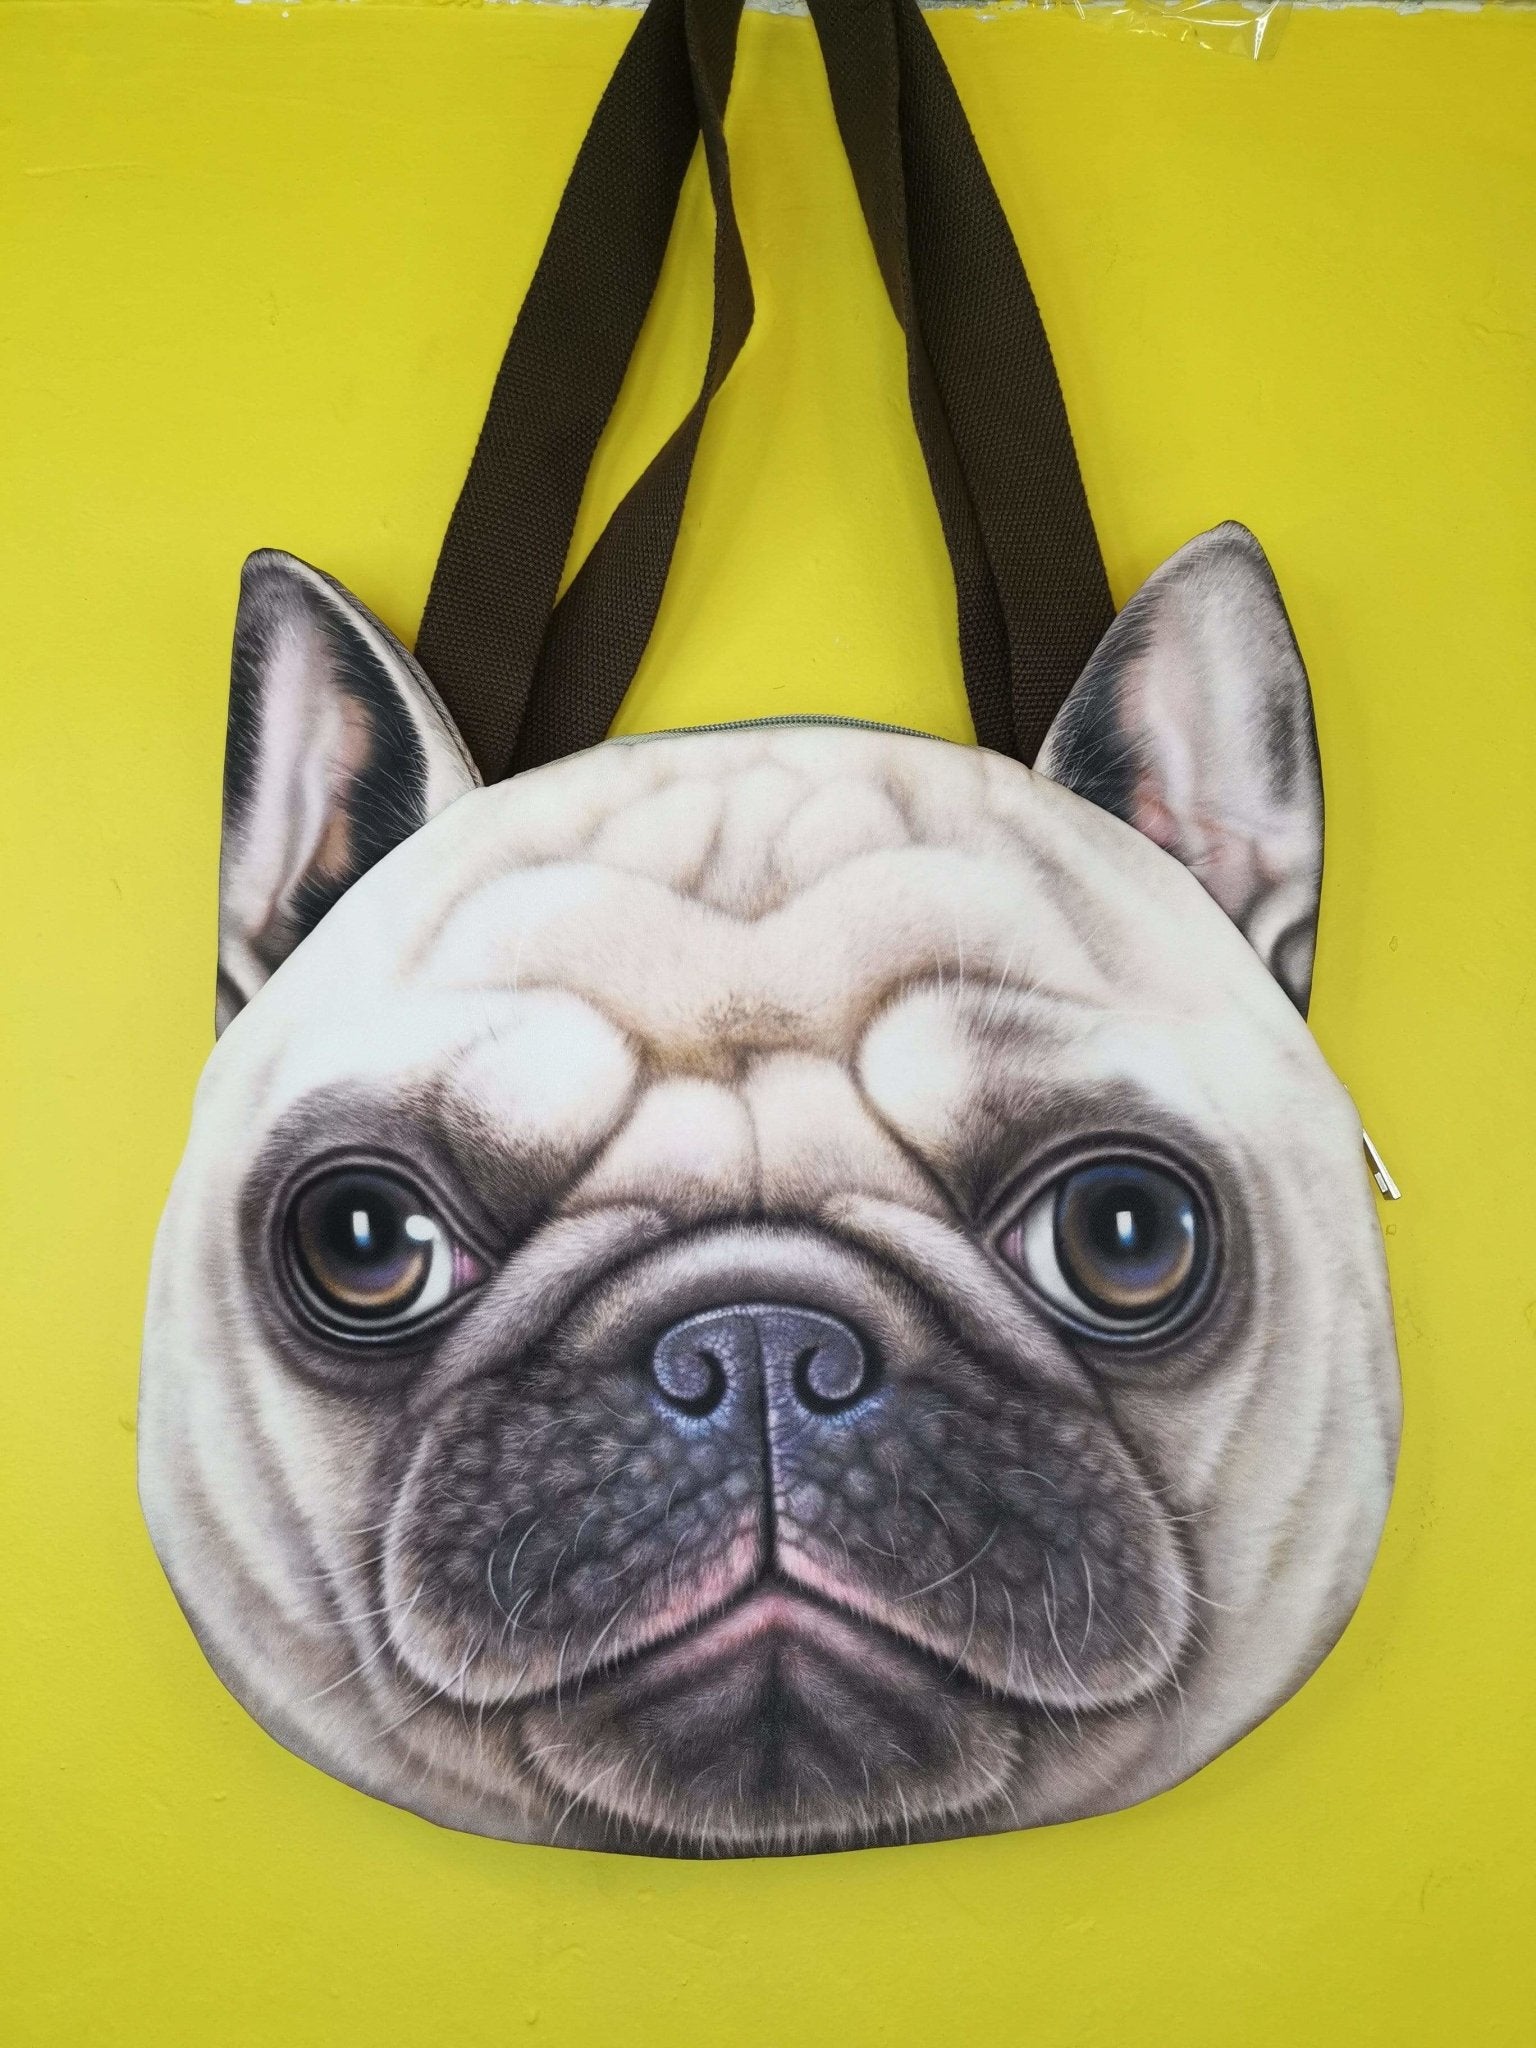 Old Pug Tote Bag by John LaFree - Pixels